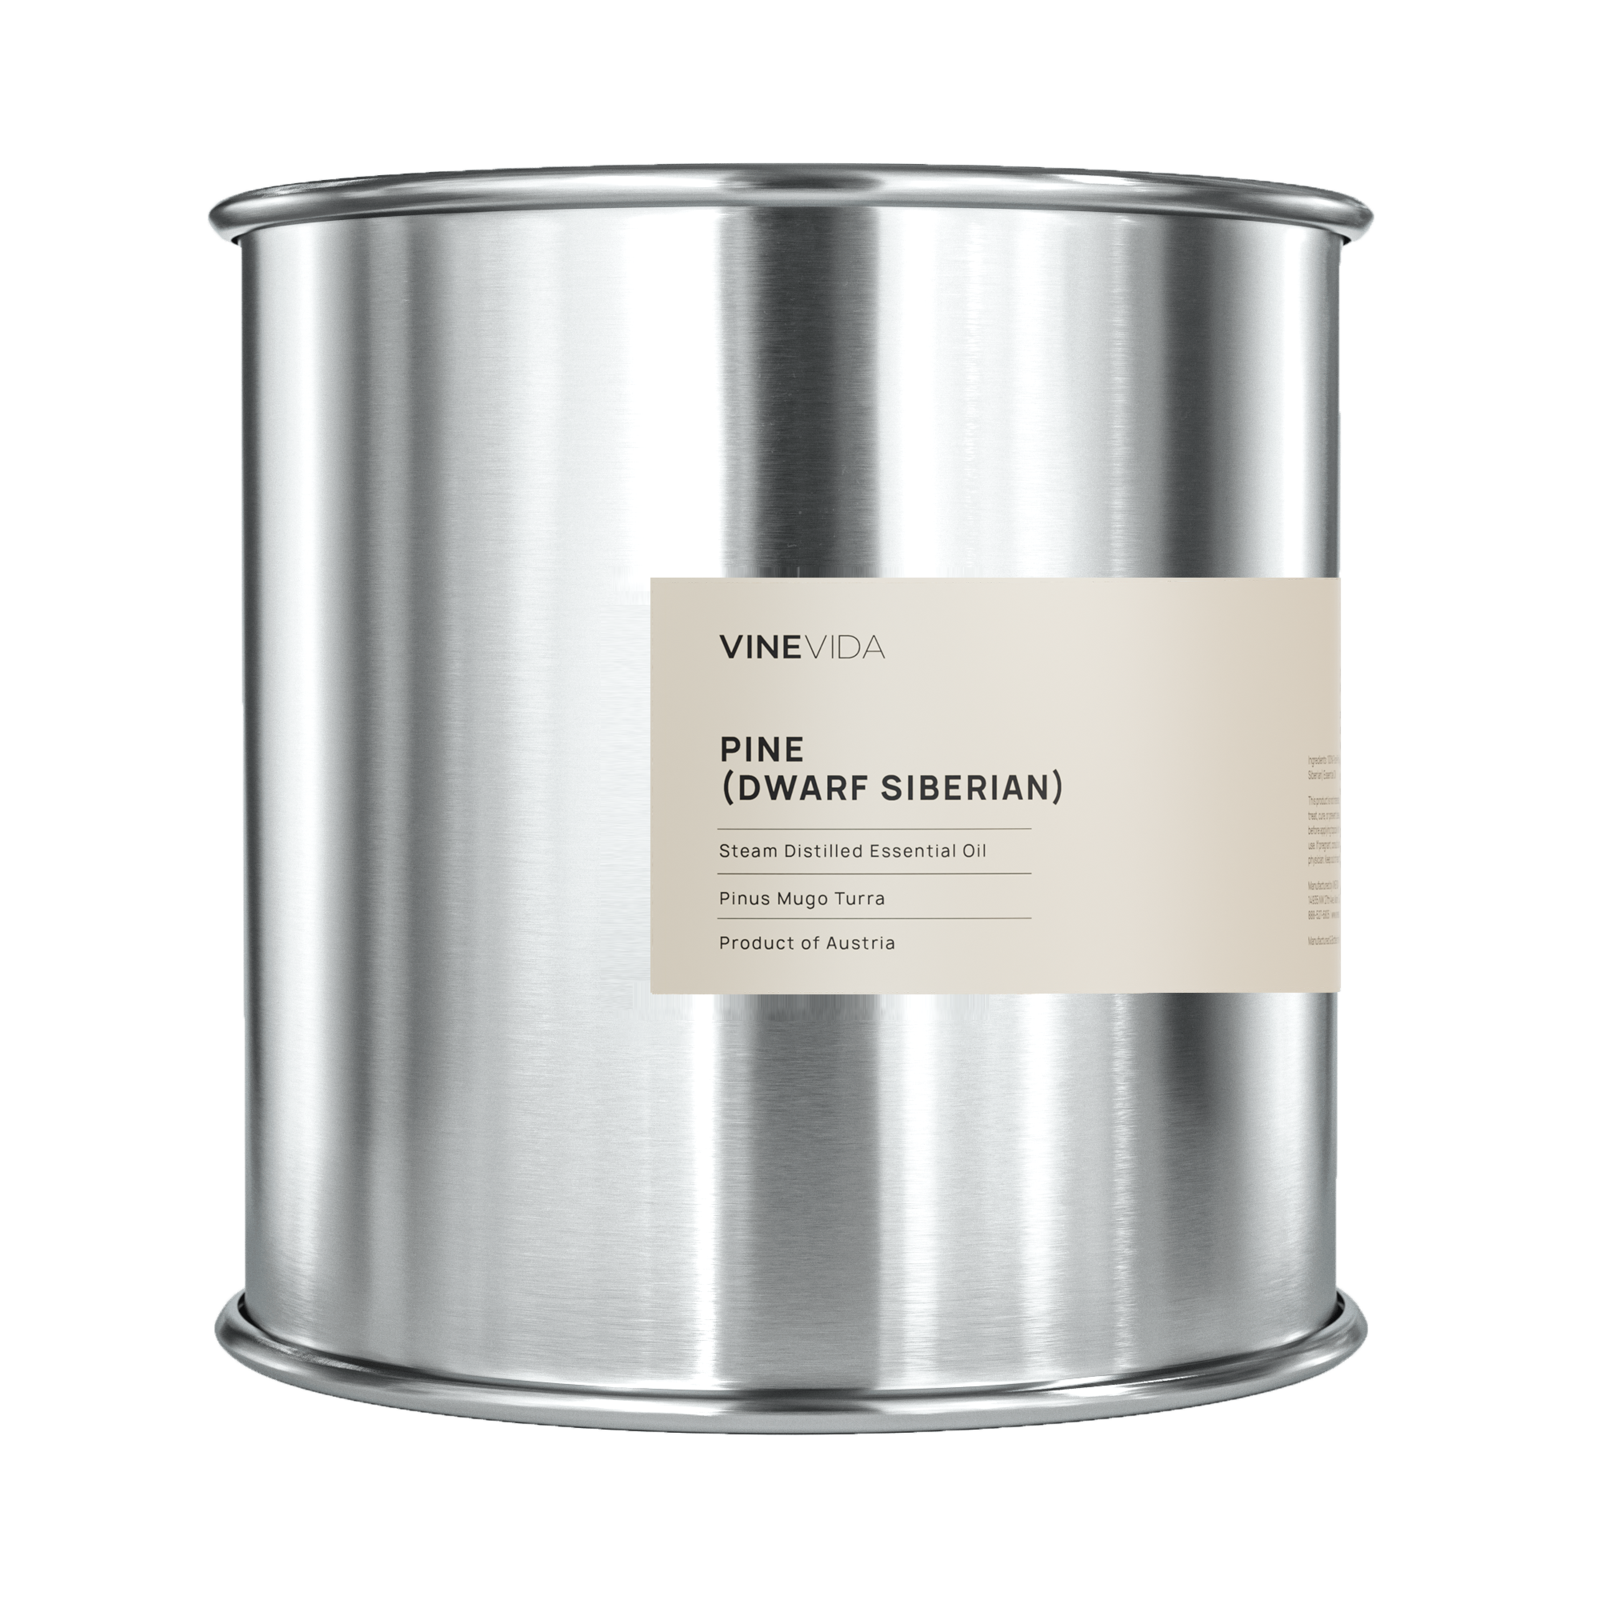 Pine (Dwarf Siberian) Essential Oil